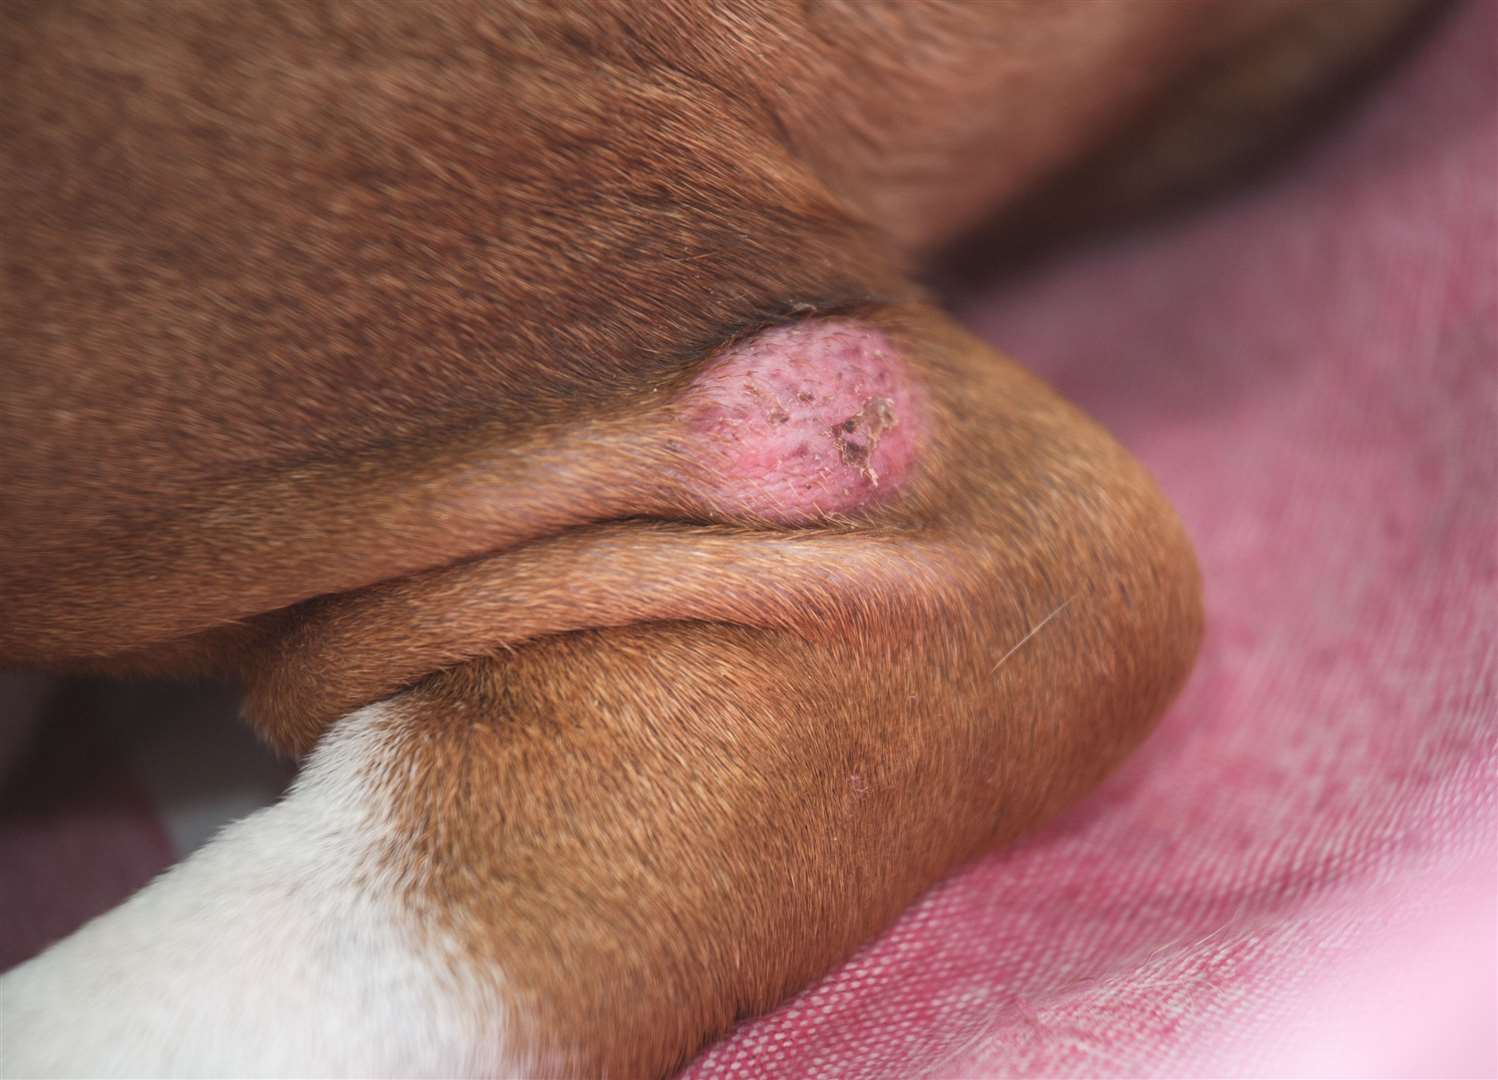 A skin problem on the leg of a bulldog. Photo: istock/marcoventuriniautieri